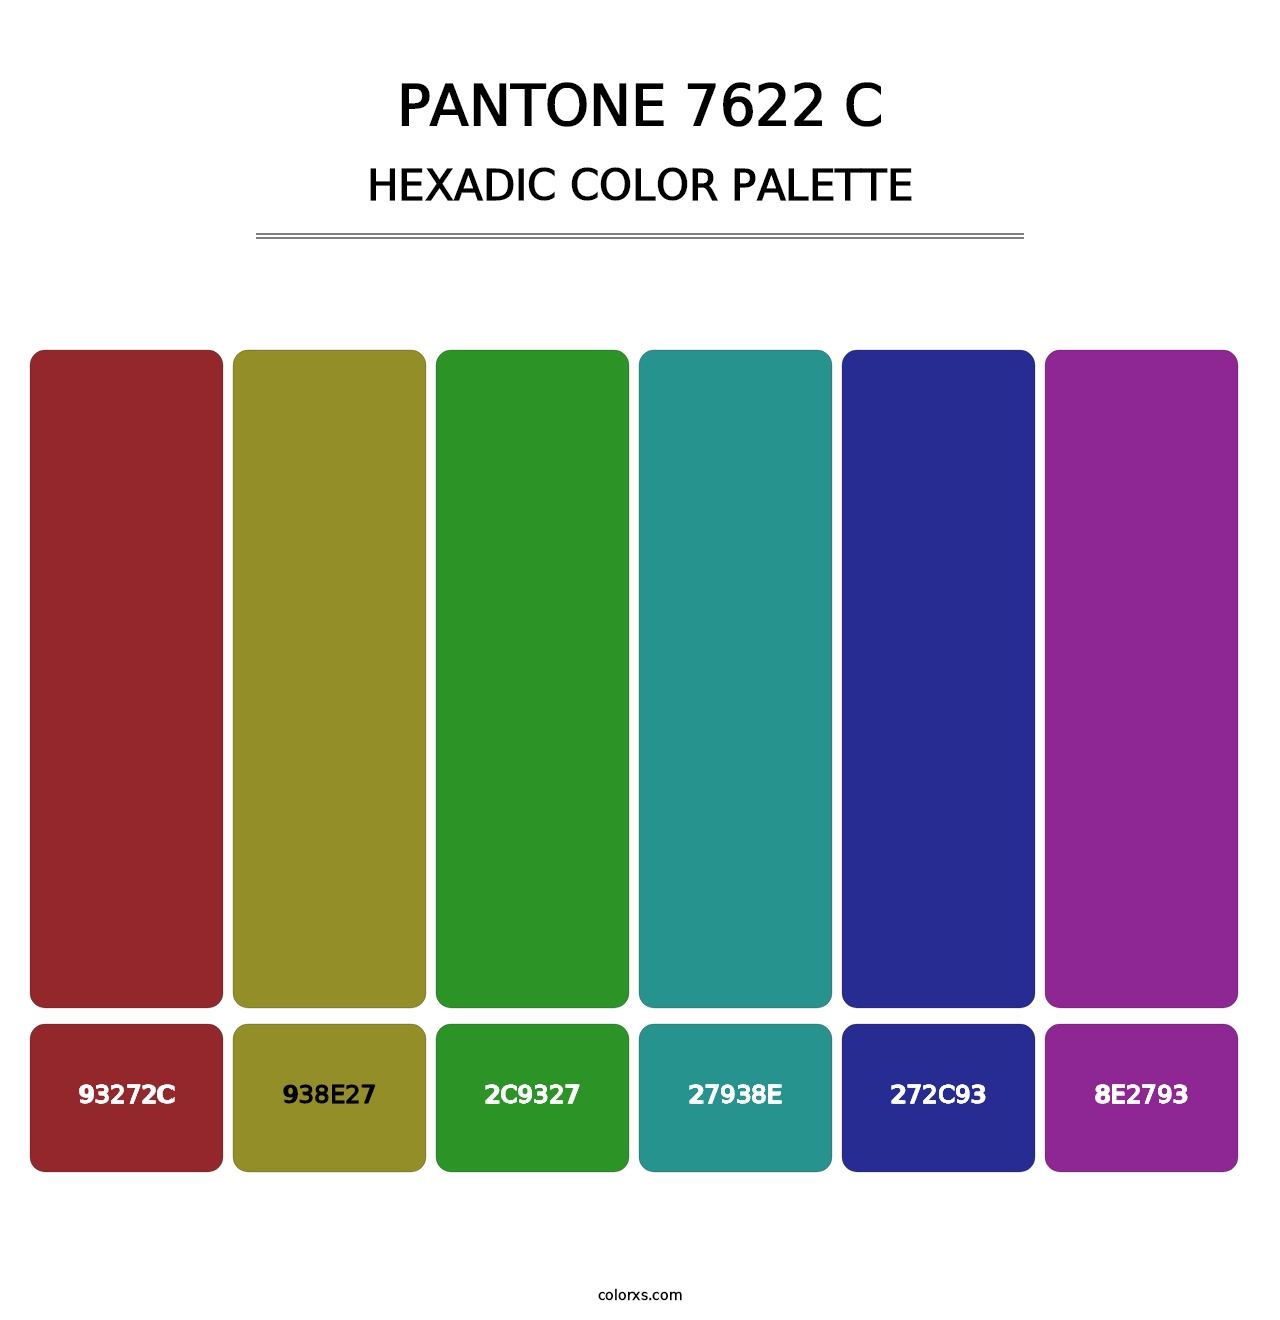 PANTONE 7622 C - Hexadic Color Palette